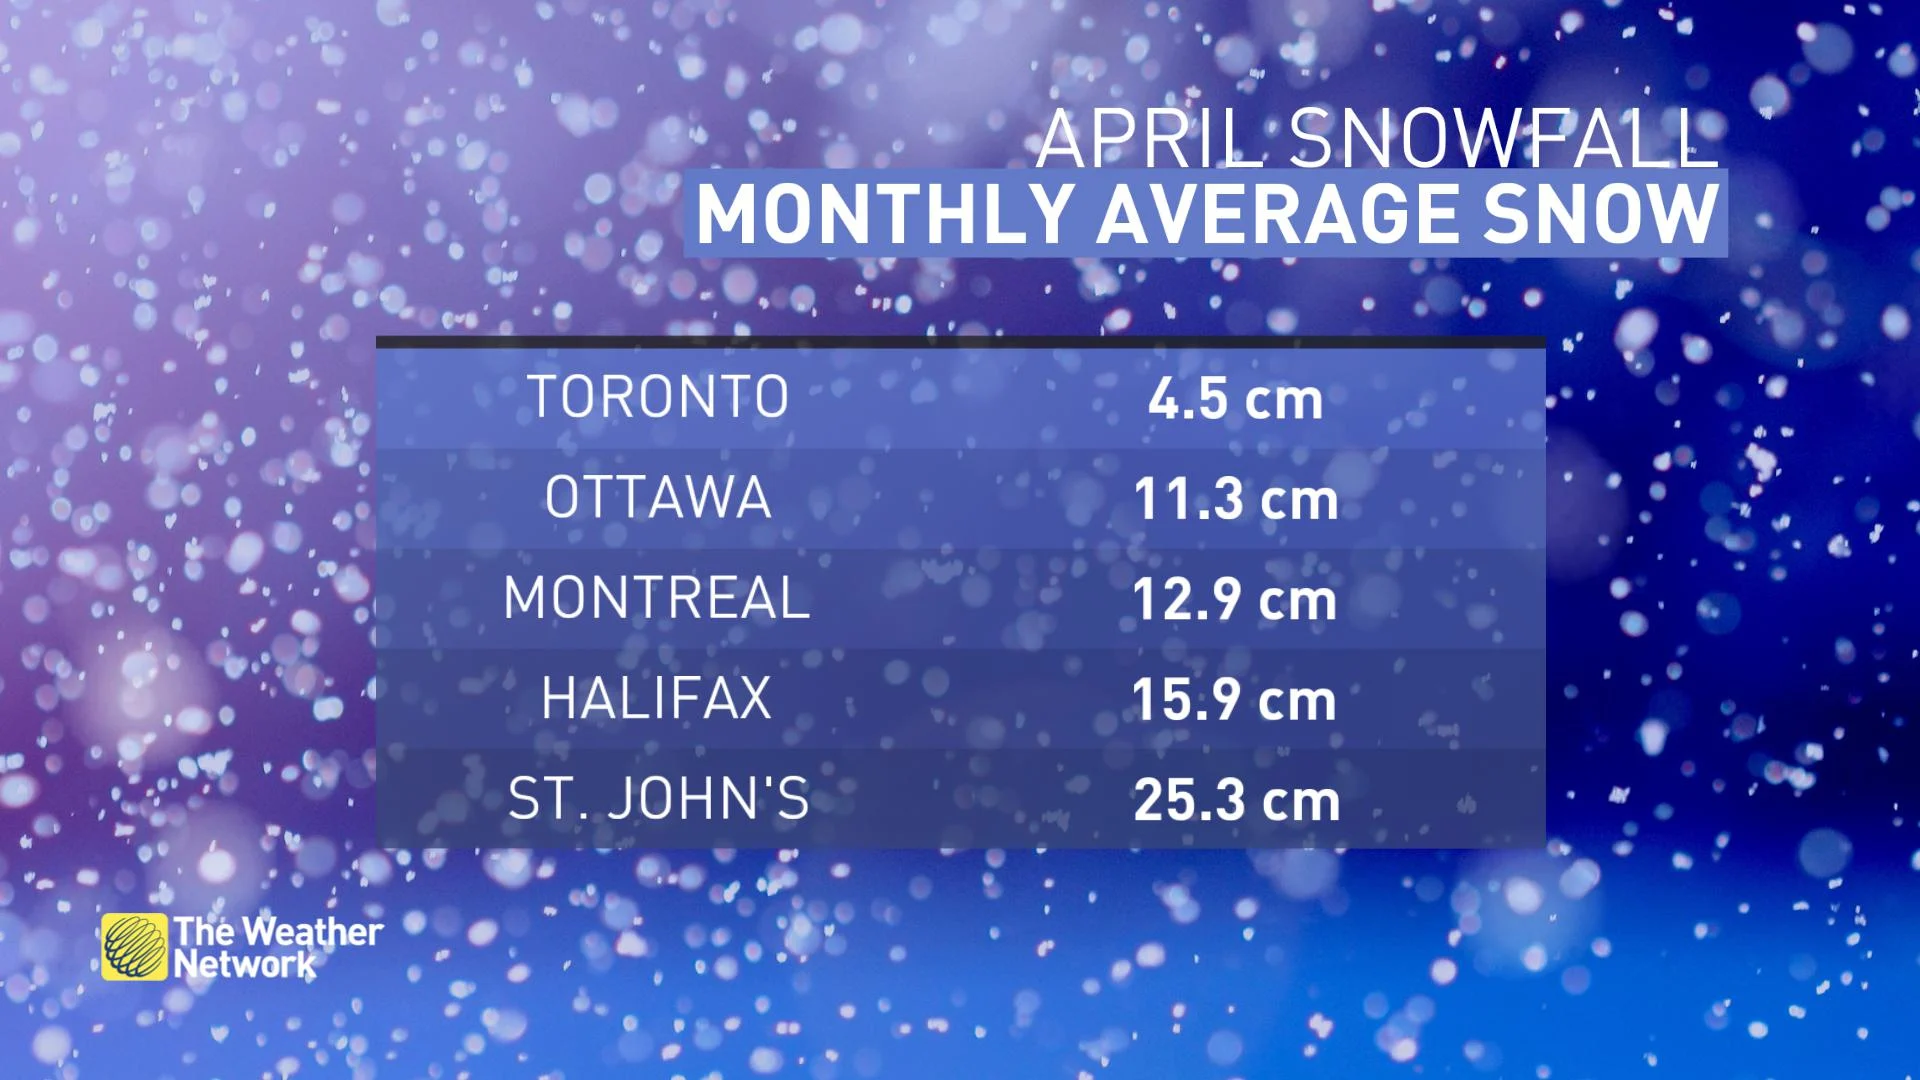 East: April average snowfall in eastern Canada